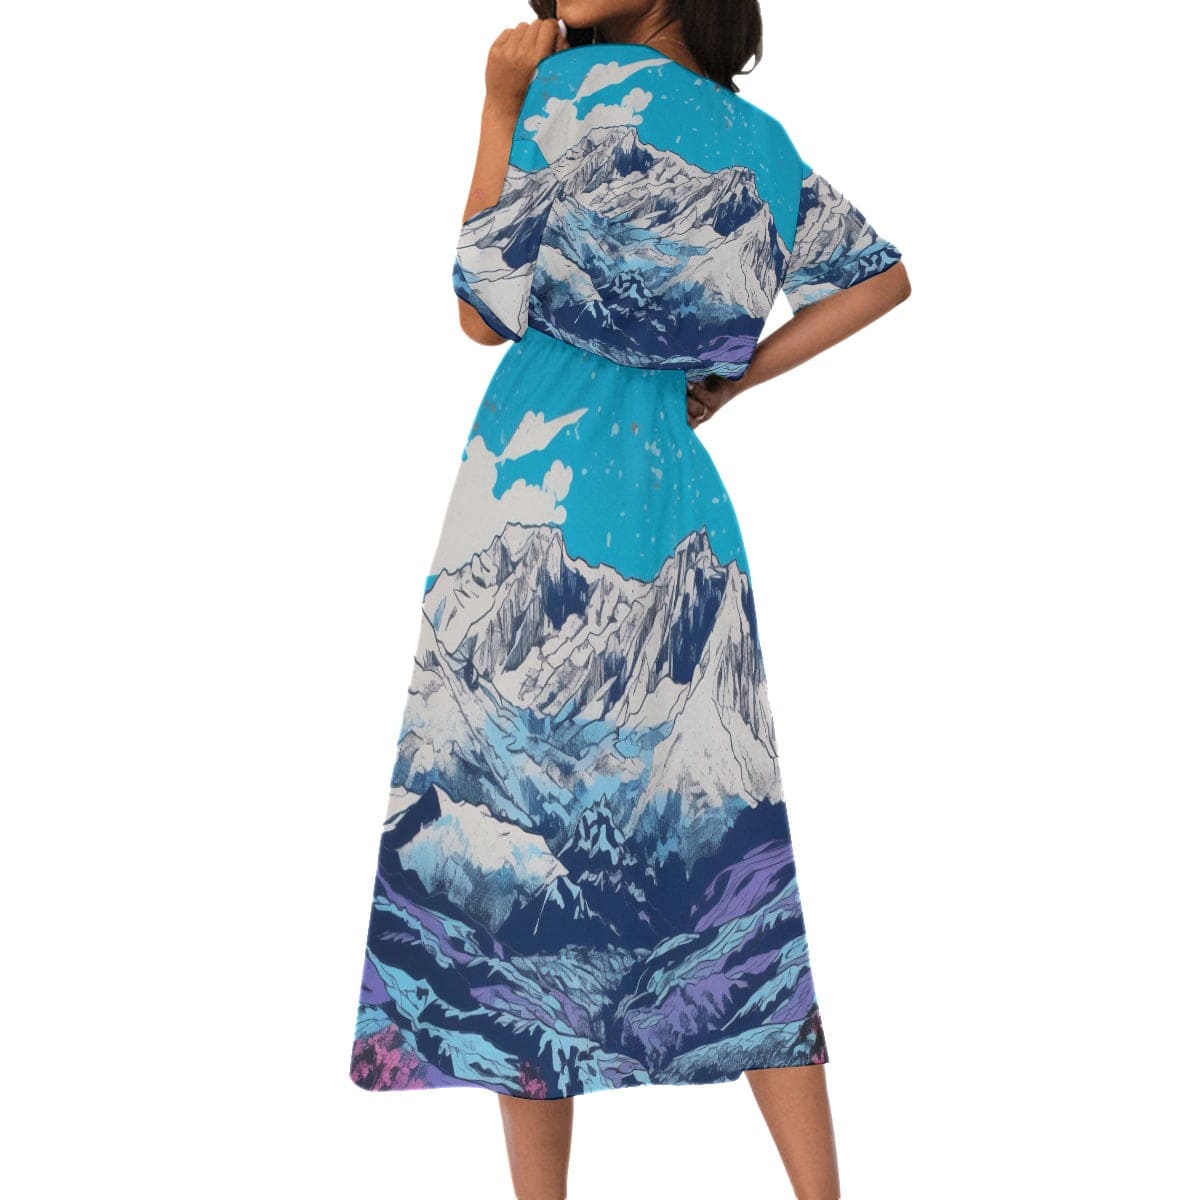 Yoycol All-Over Print Women's Elastic Waist Dress